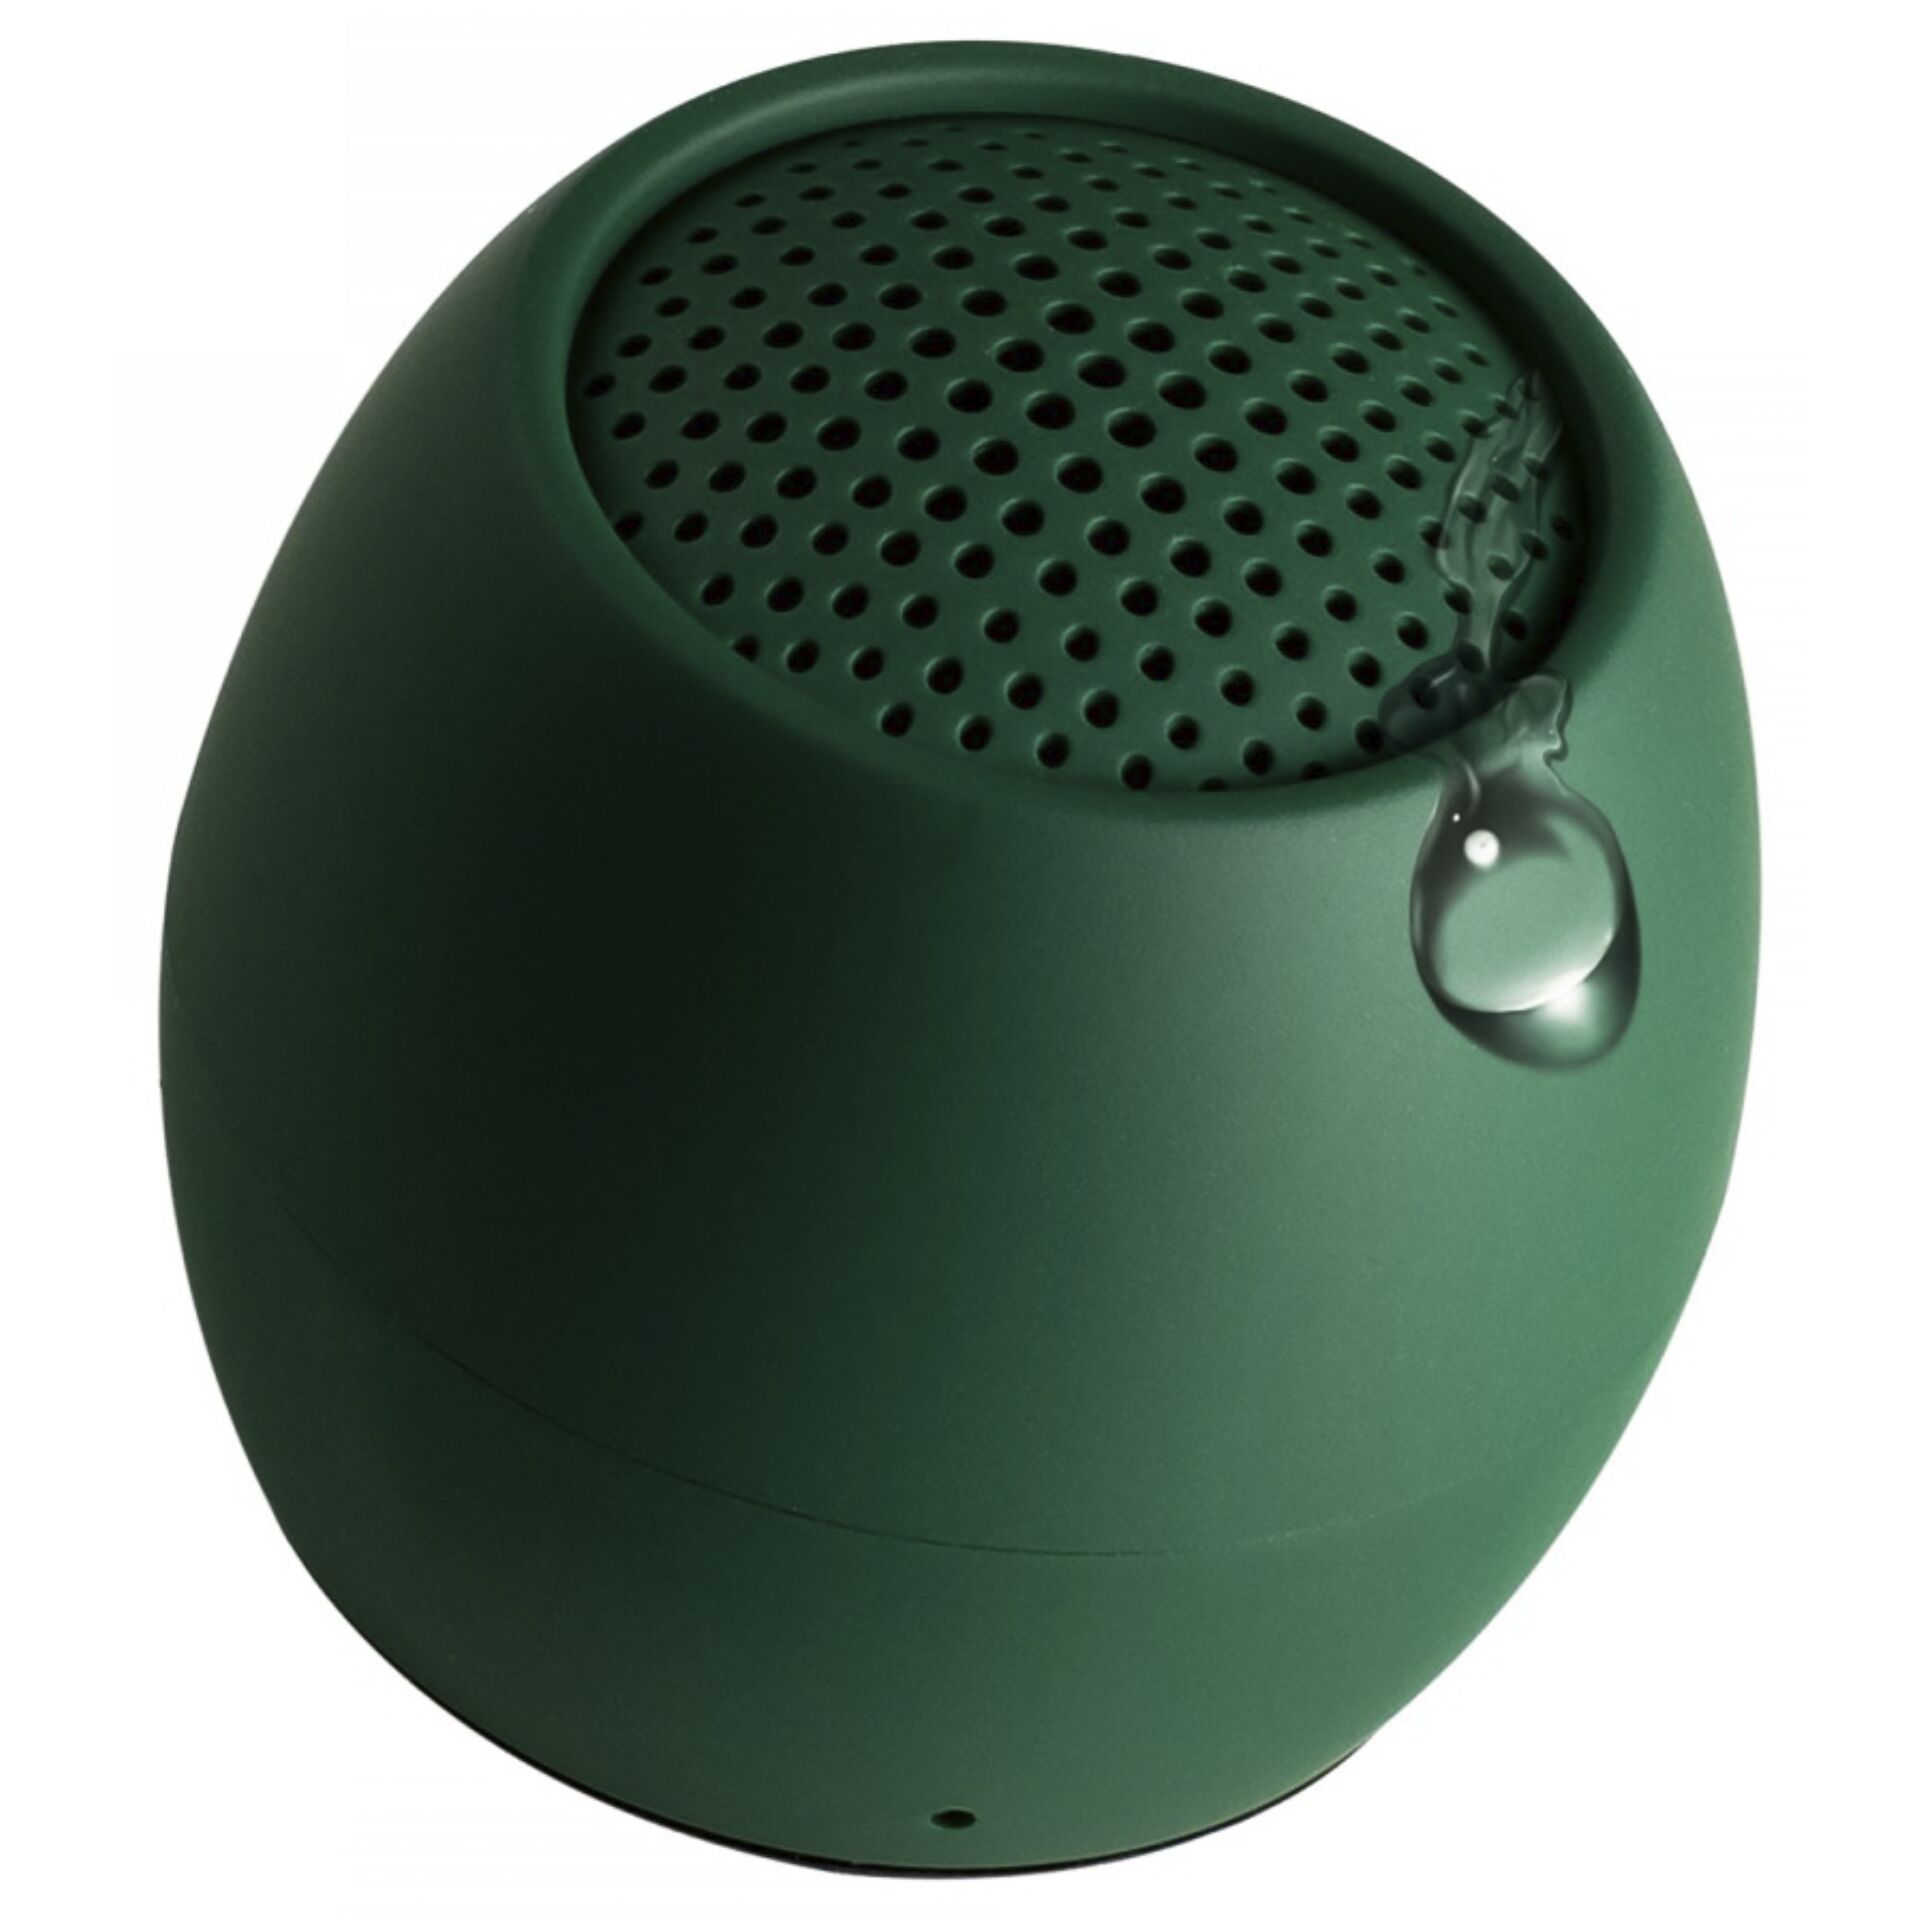 Boompods Zero Speaker Tragbarer Mono-Lautsprecher Grün 3 W